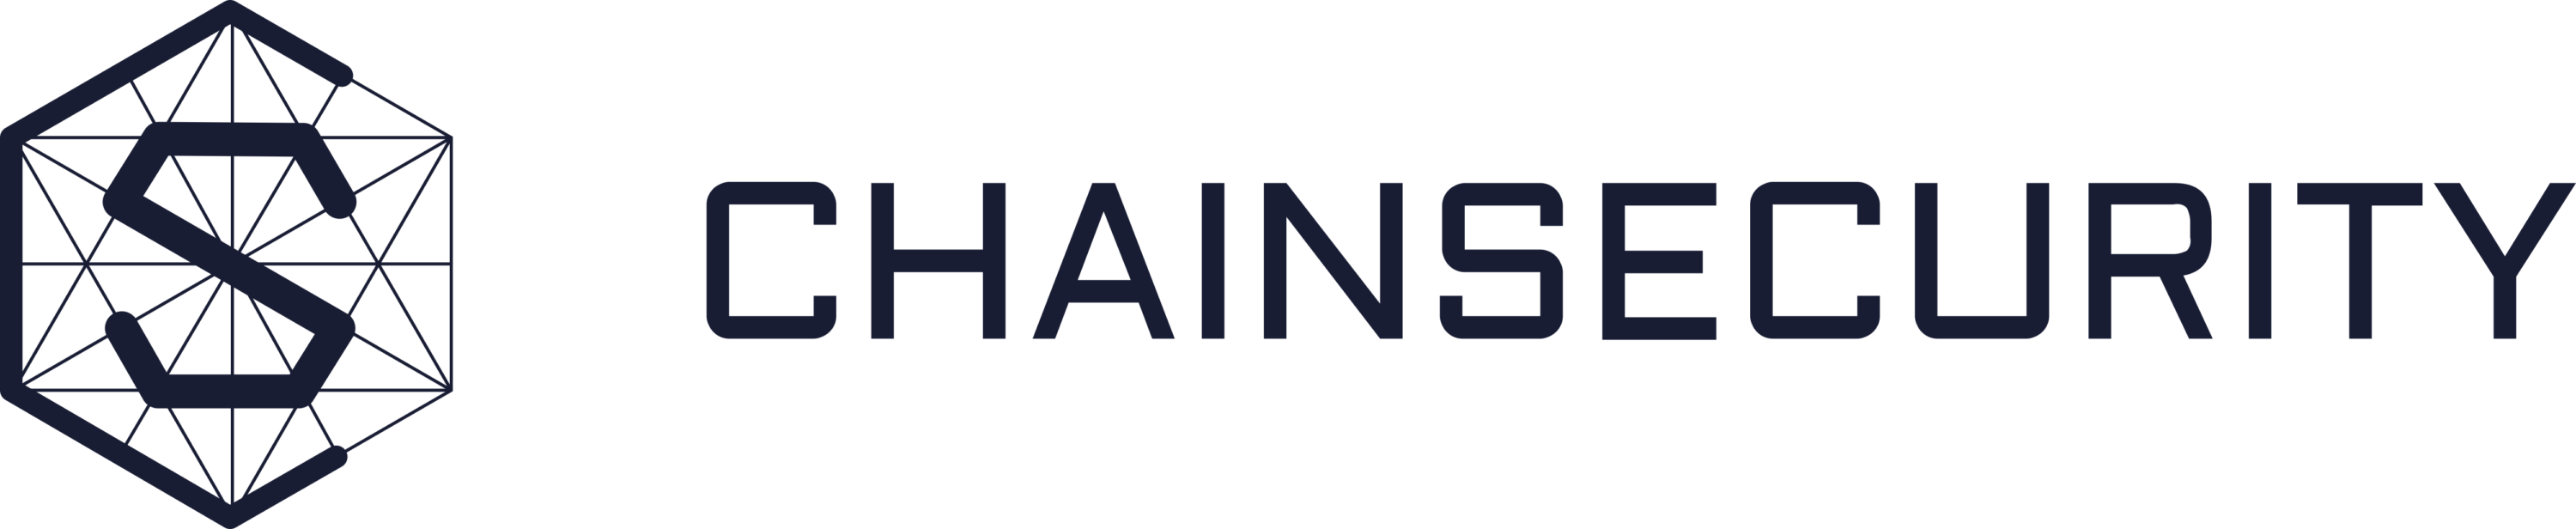 Chain Security Logo